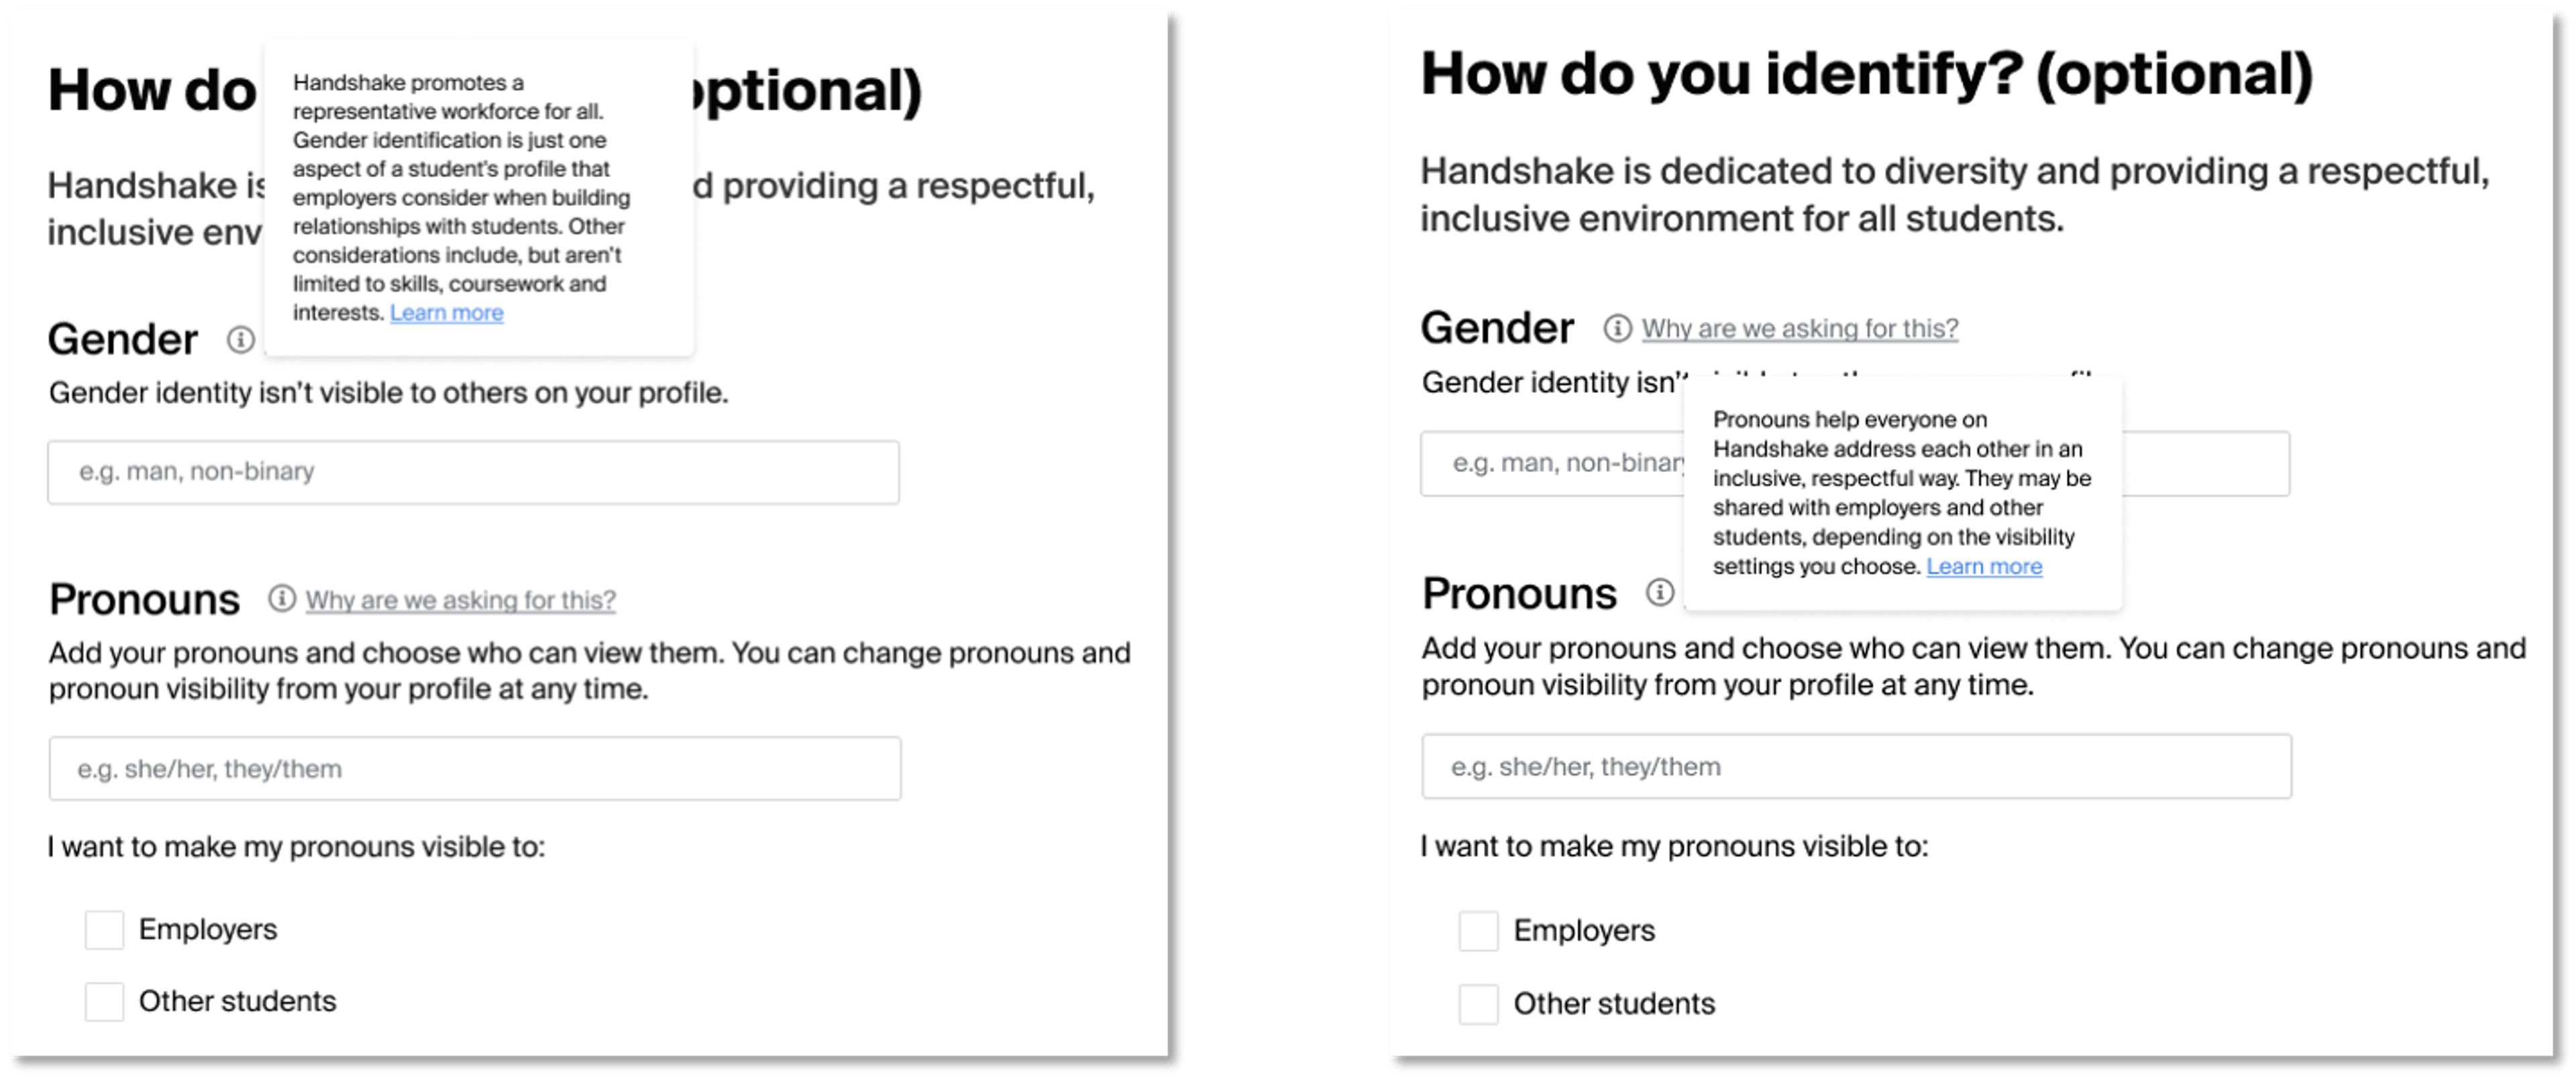 Gender identity and pronoun help text in Handshake